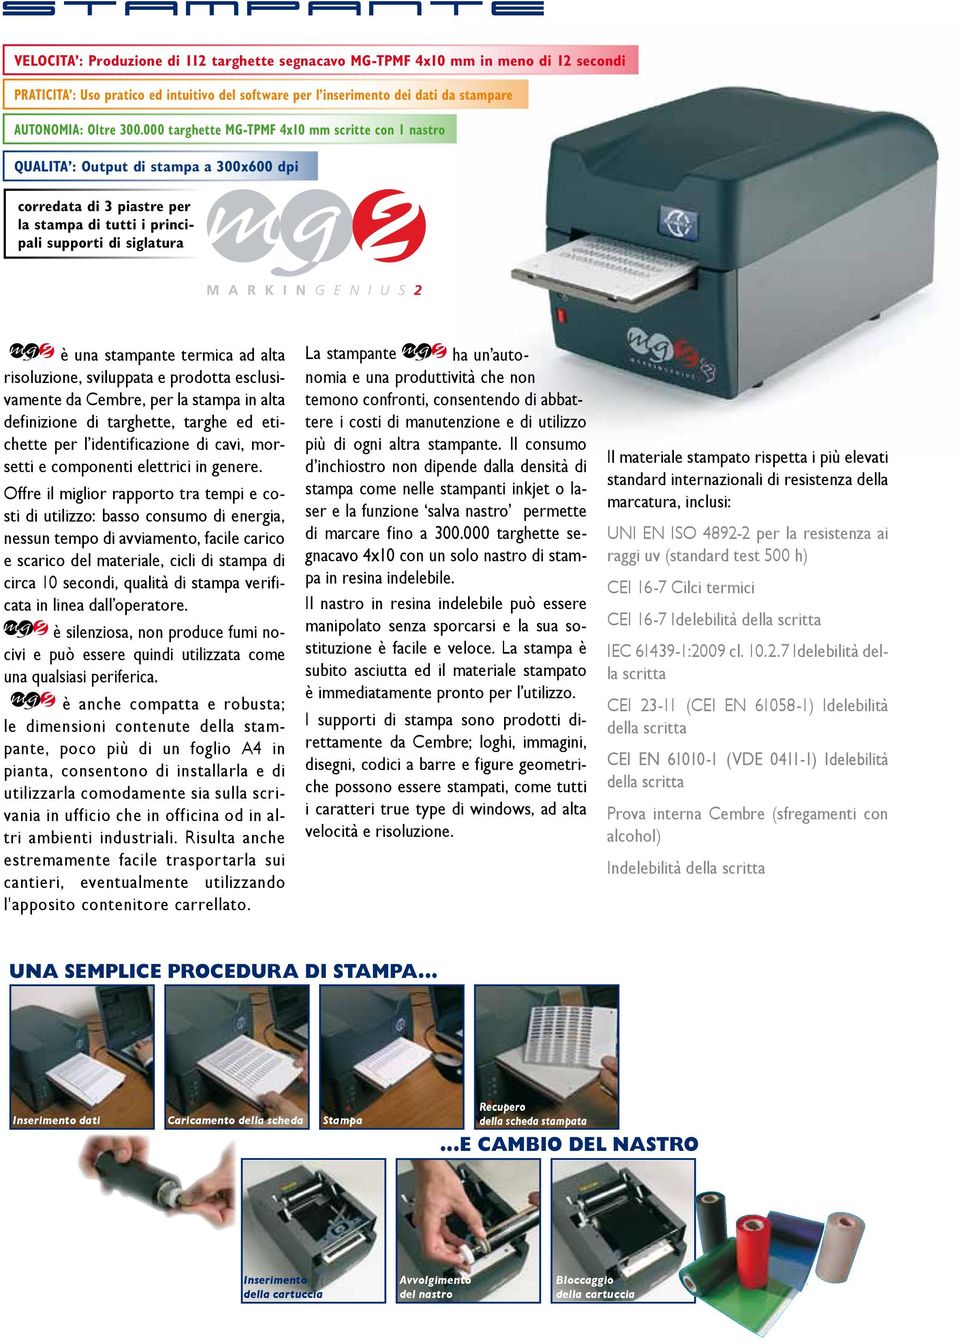 000 targhette MG-TPMF 4x10 mm scritte con 1 nastro QUALITA : Output di stampa a 300x600 dpi corredata di 3 piastre per la stampa di tutti i principali supporti di siglatura è una stampante termica ad